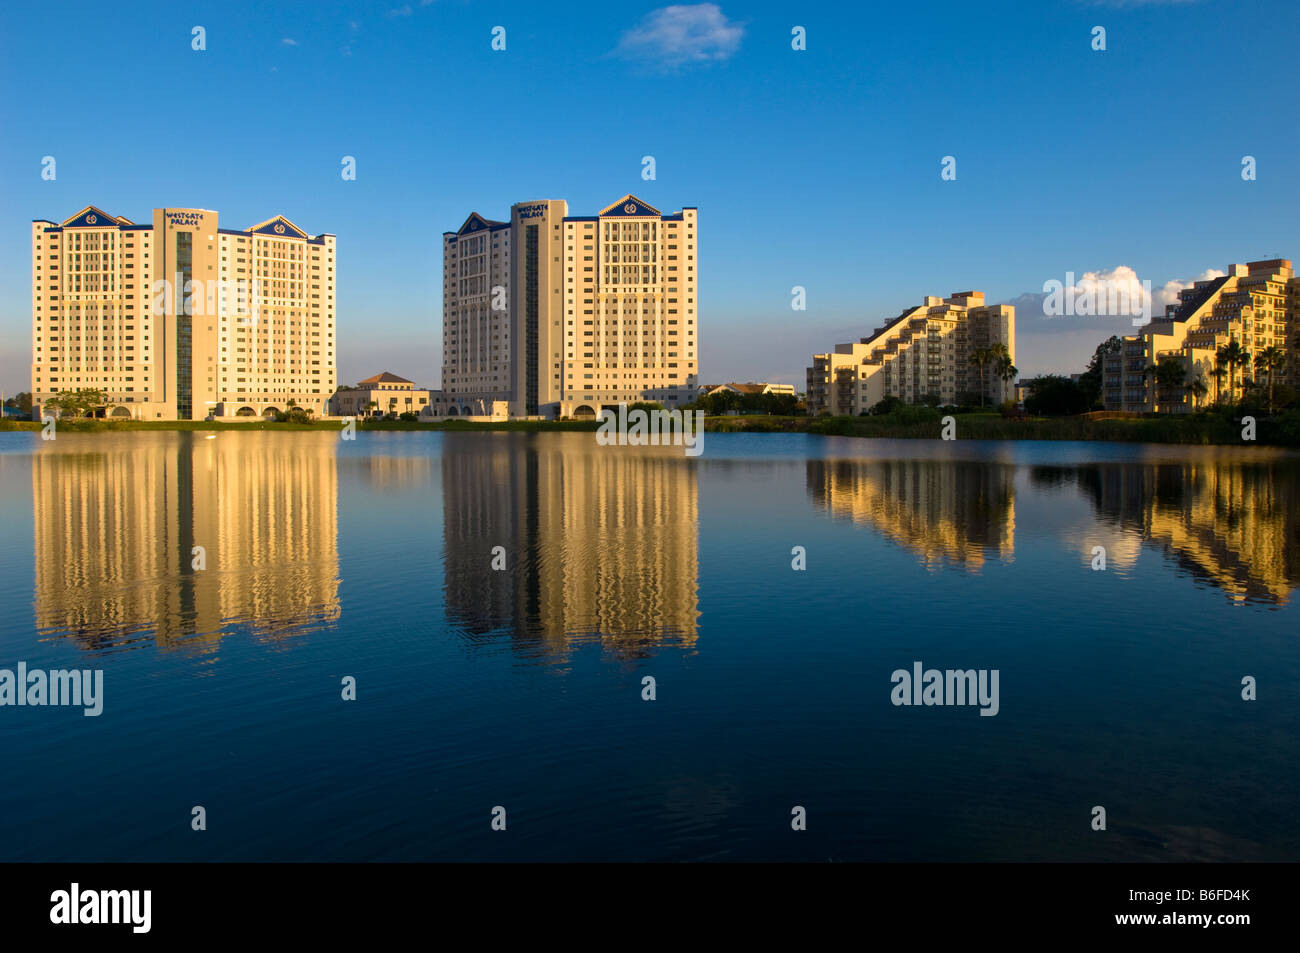 Hotel complex by International Drive Orlando Florida United States of America Stock Photo